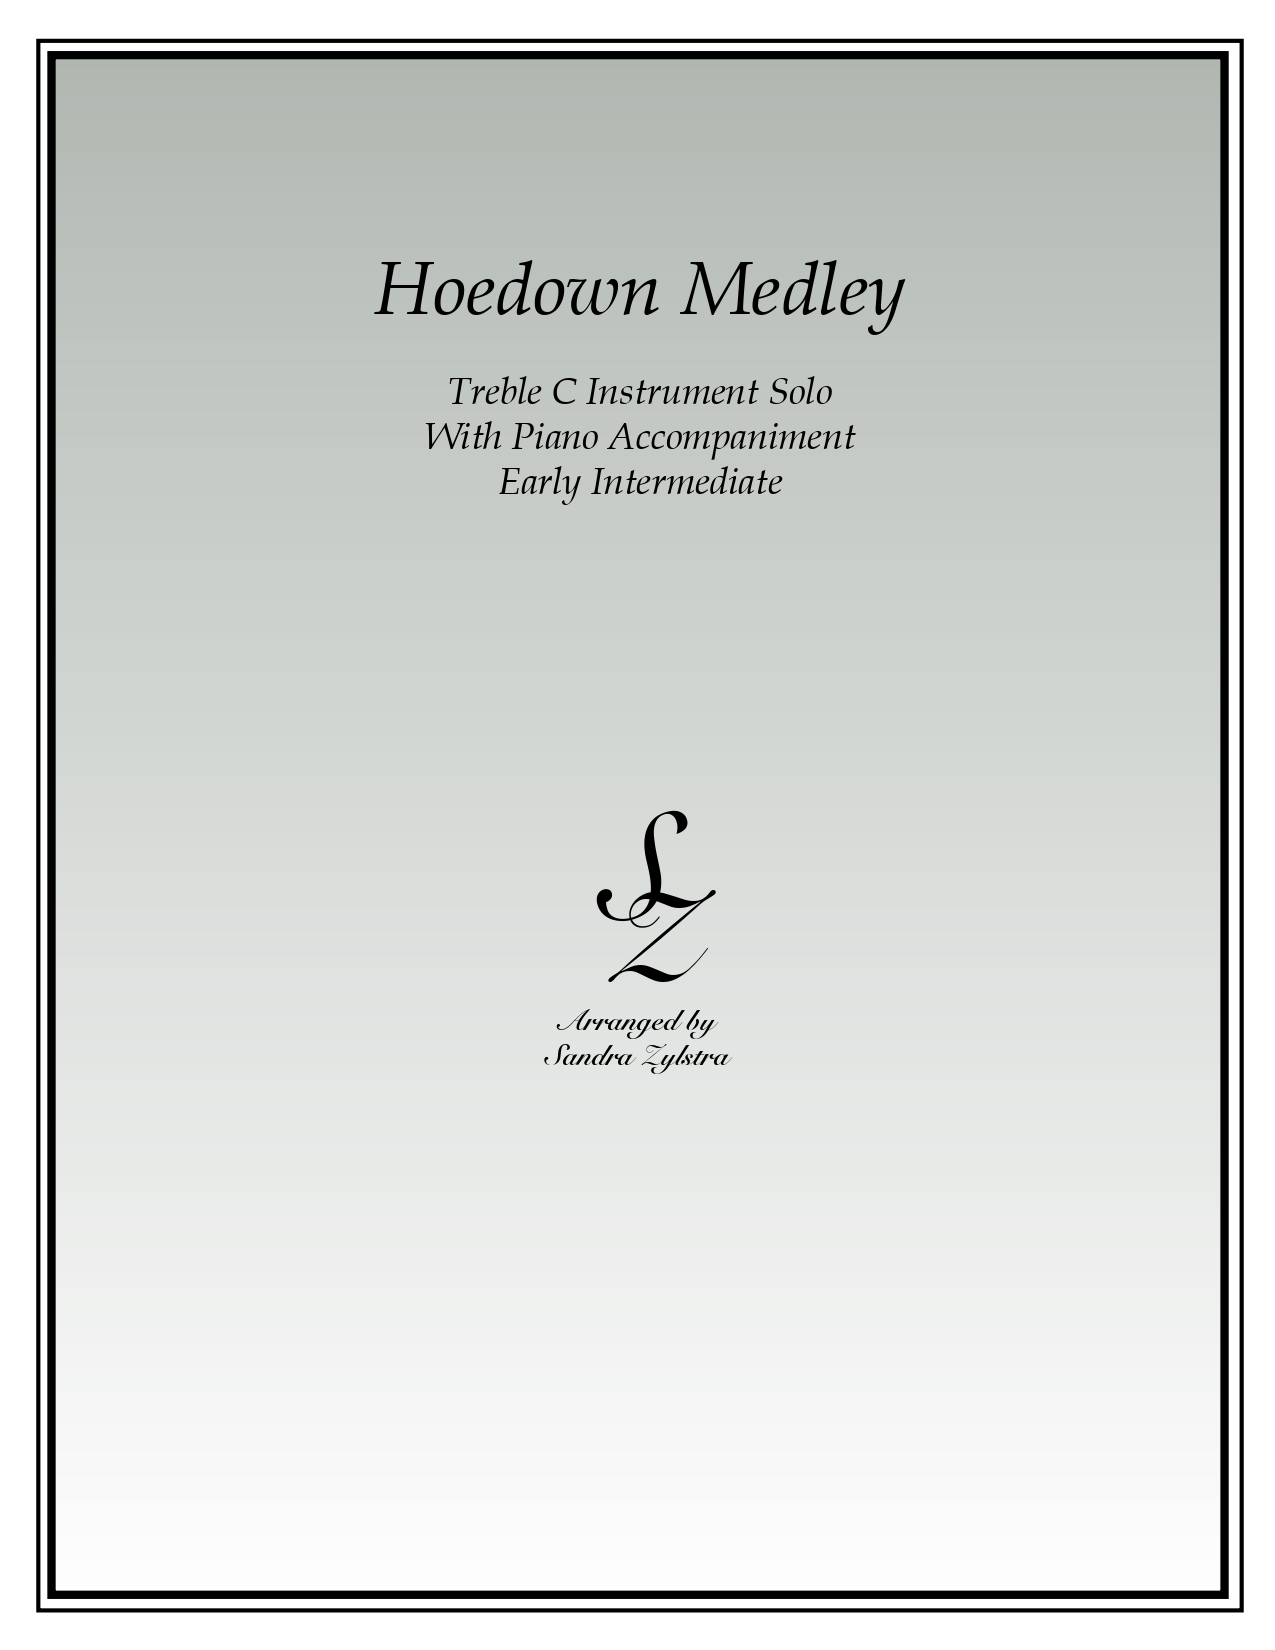 Hoedown Medley treble C instrument solo part cover page 00011